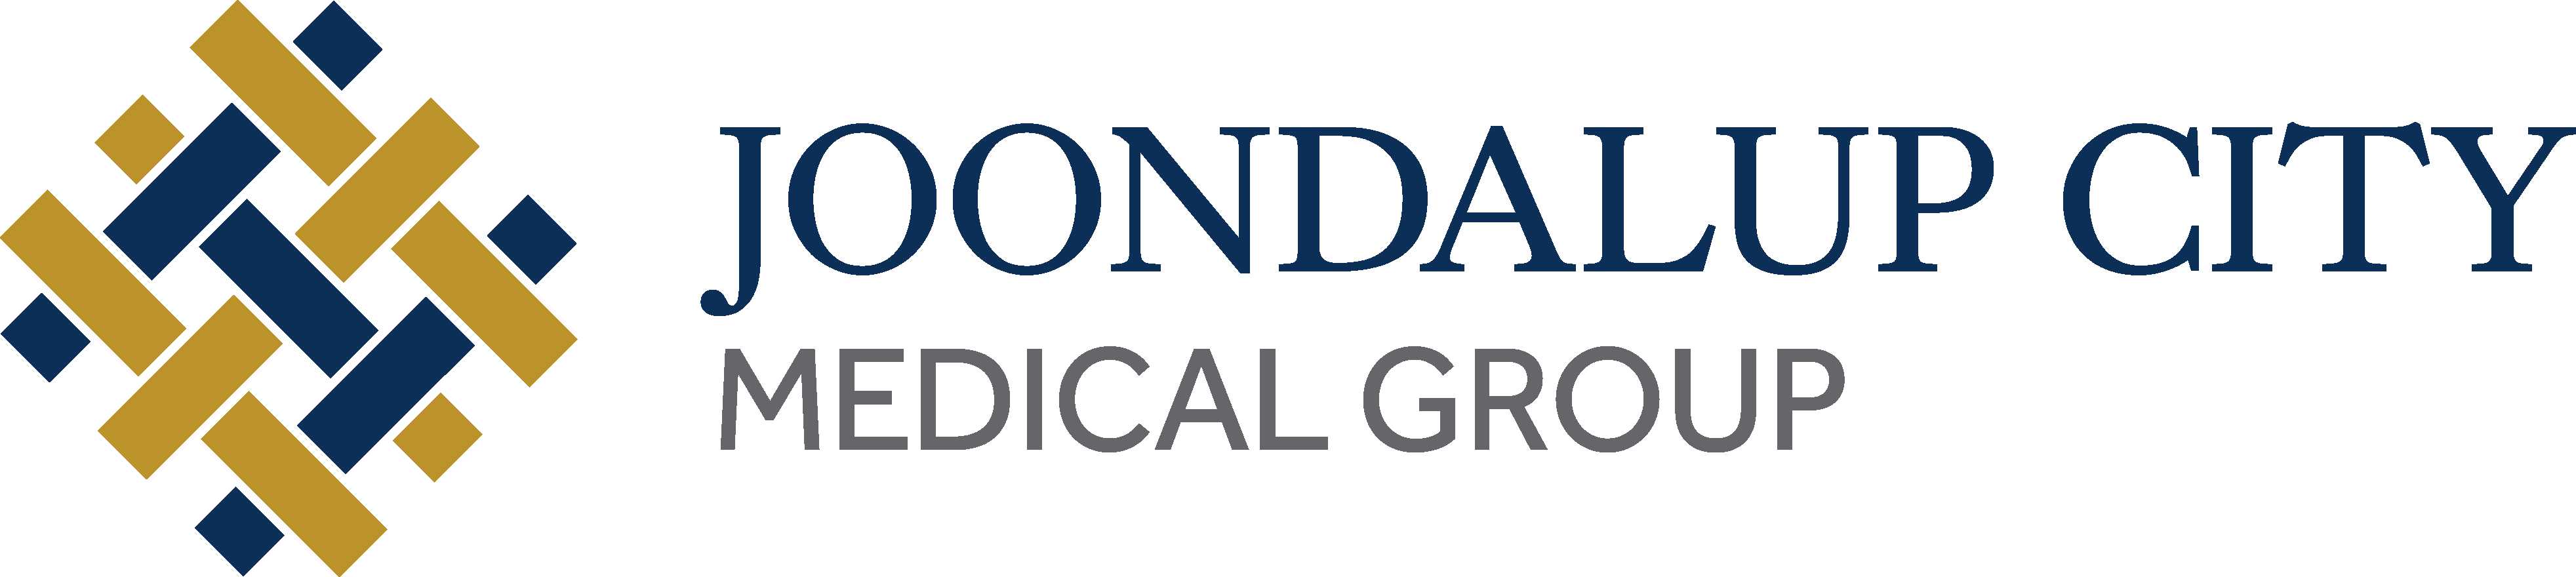 Joondalup City Medical Group